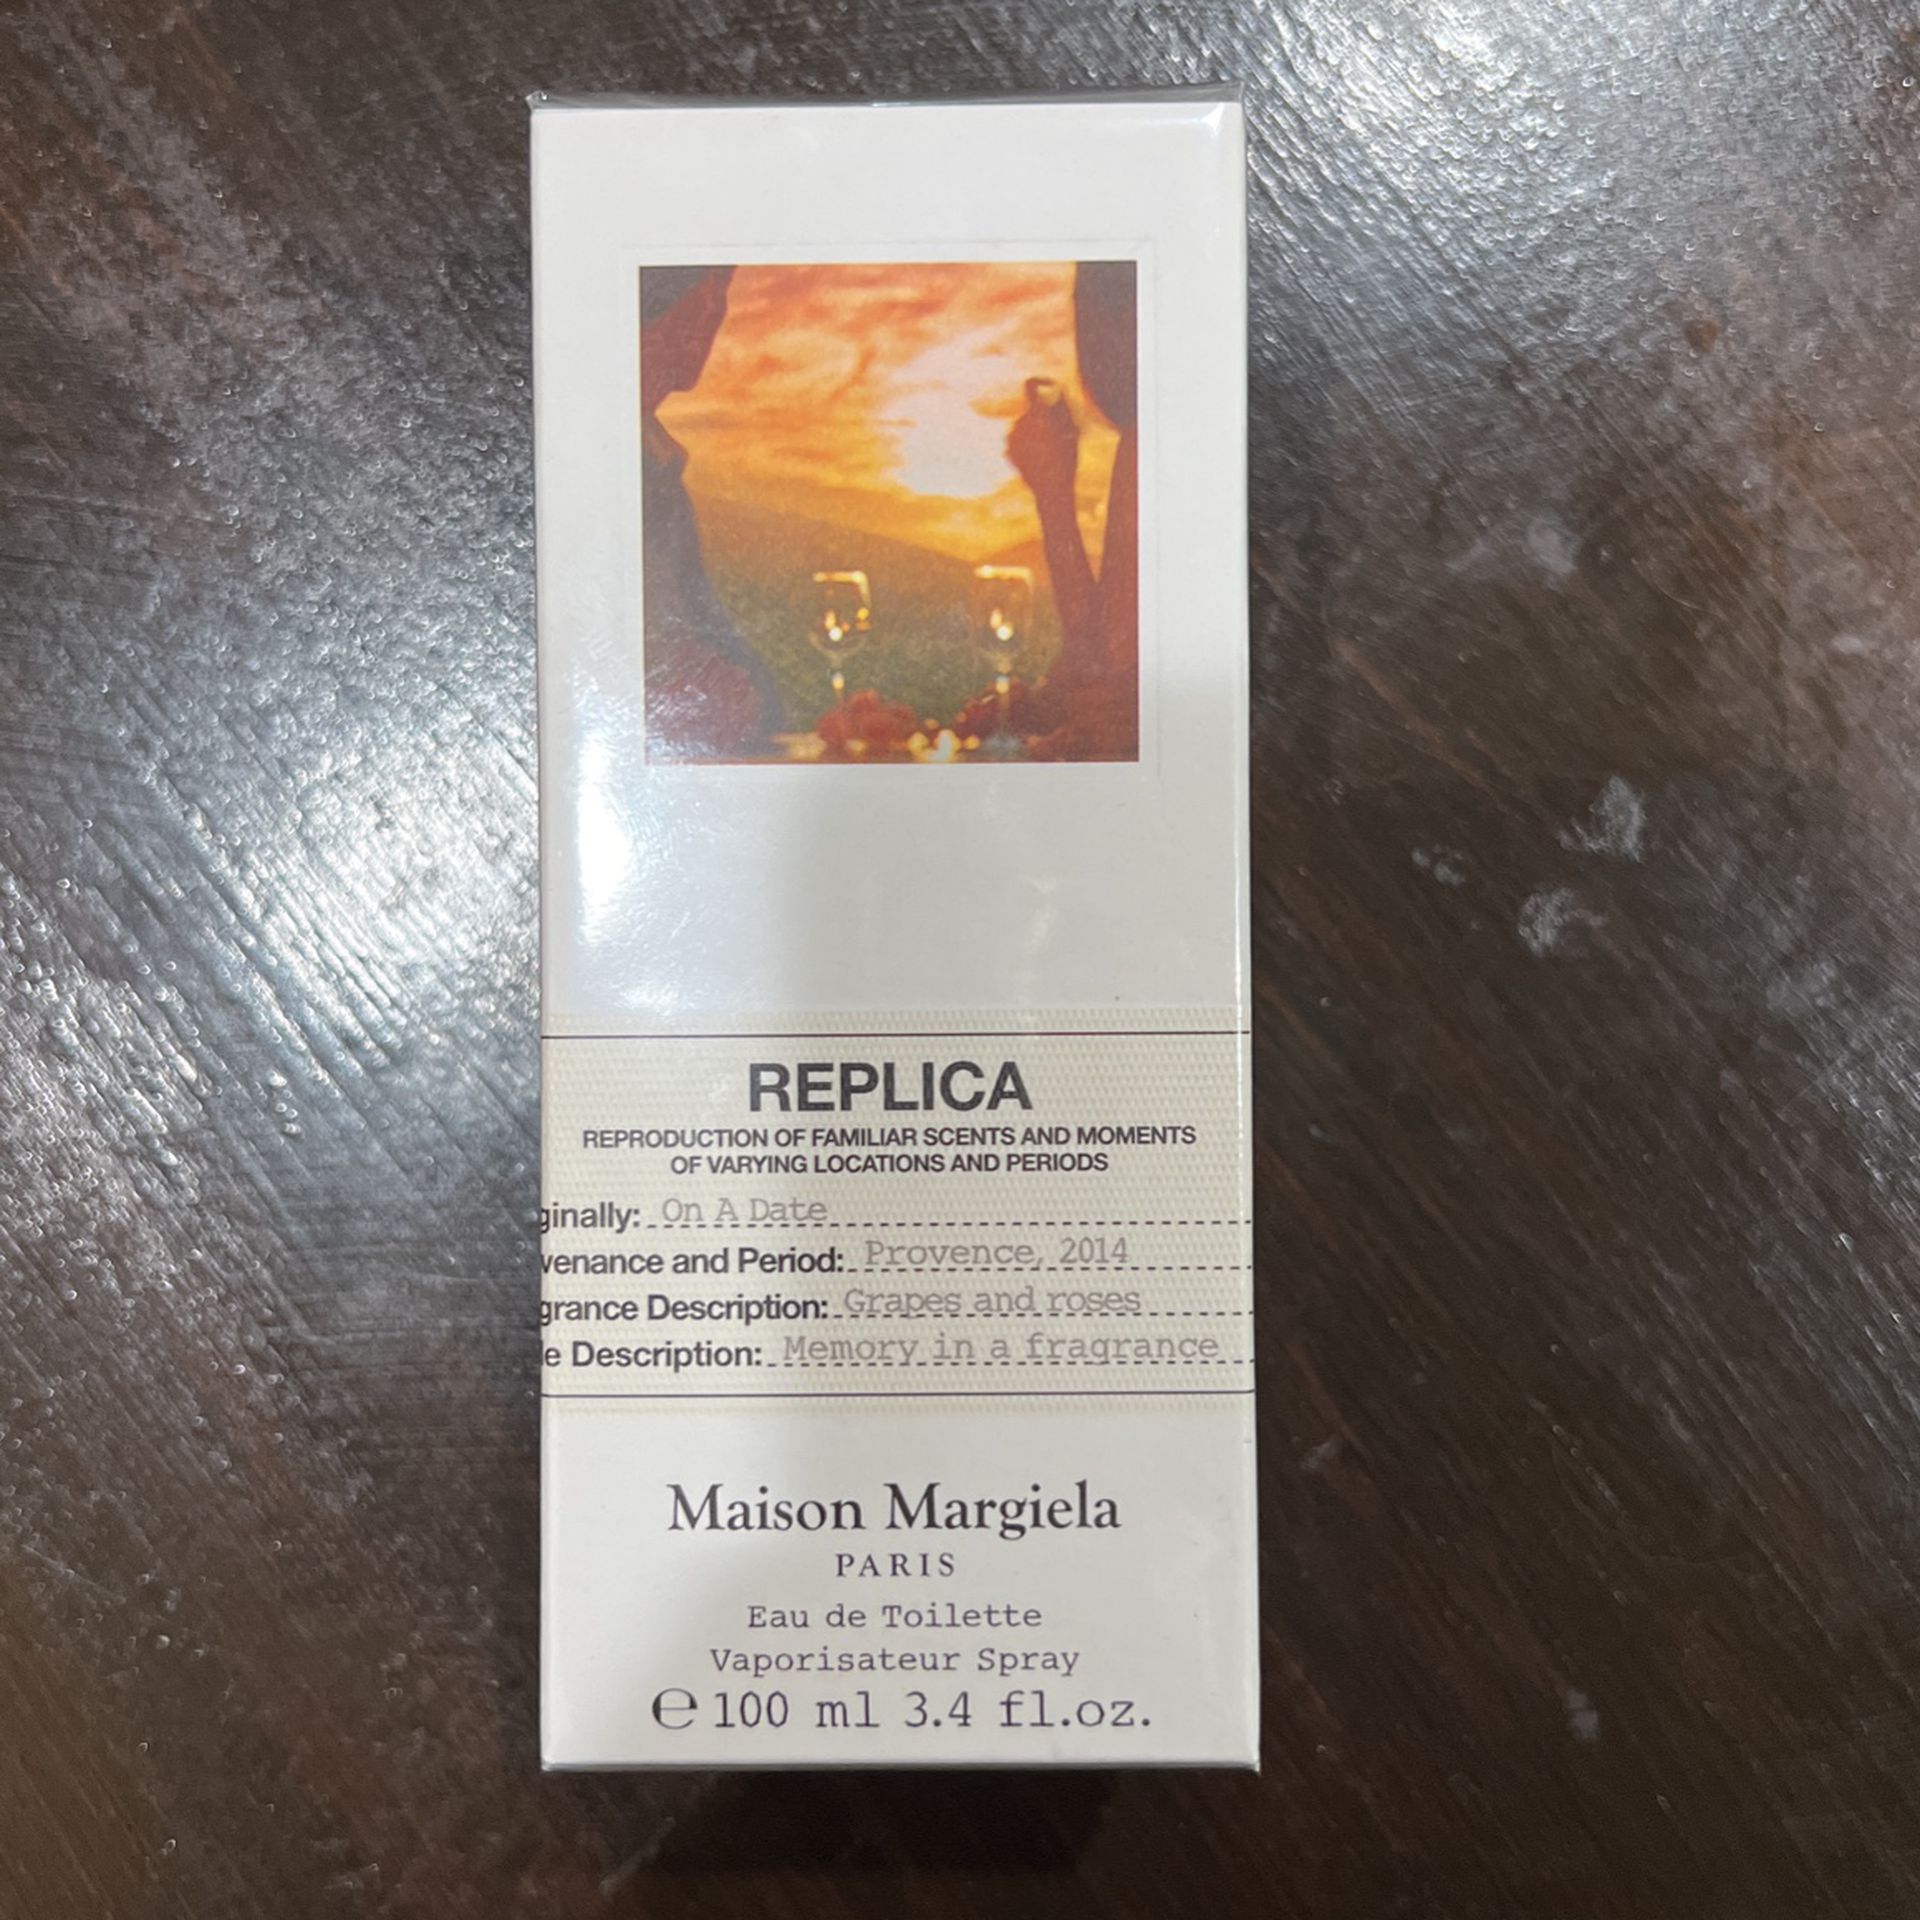 Maison Margiela Replica On A Date Fragrance